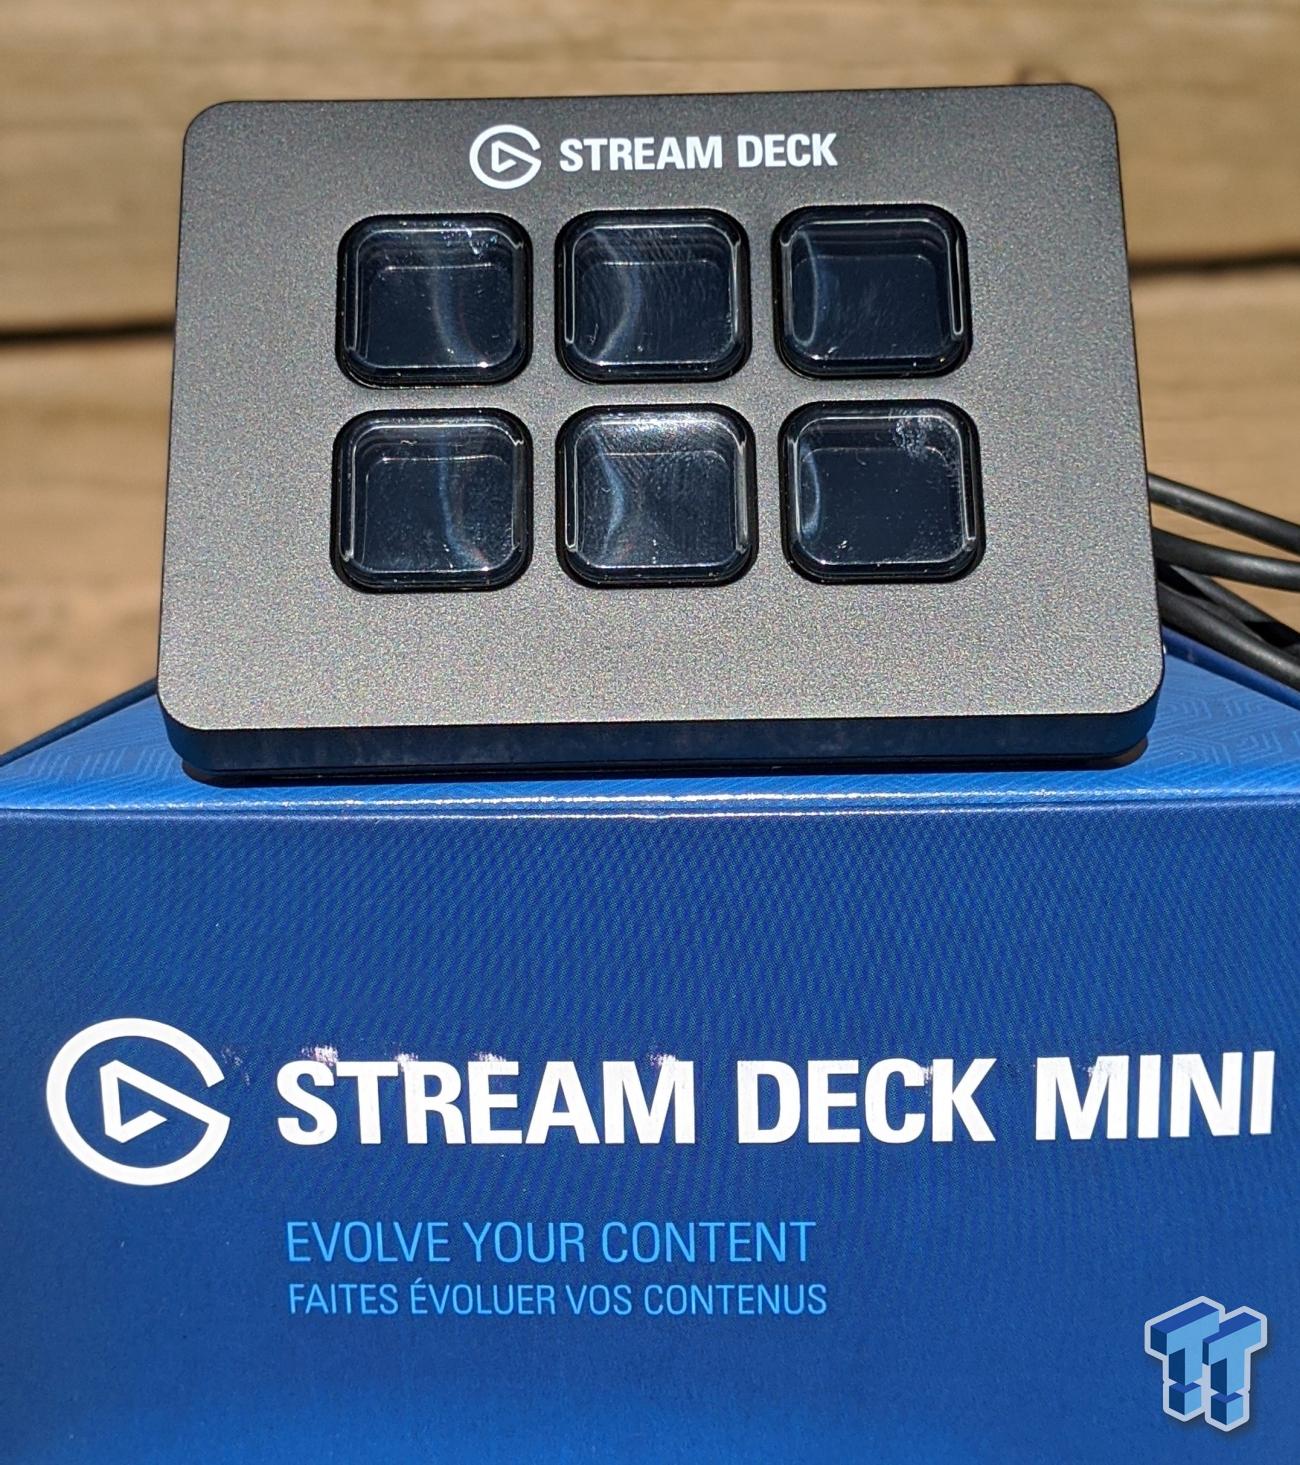 Elgato Stream Deck Mini revealed: Price, features, release date